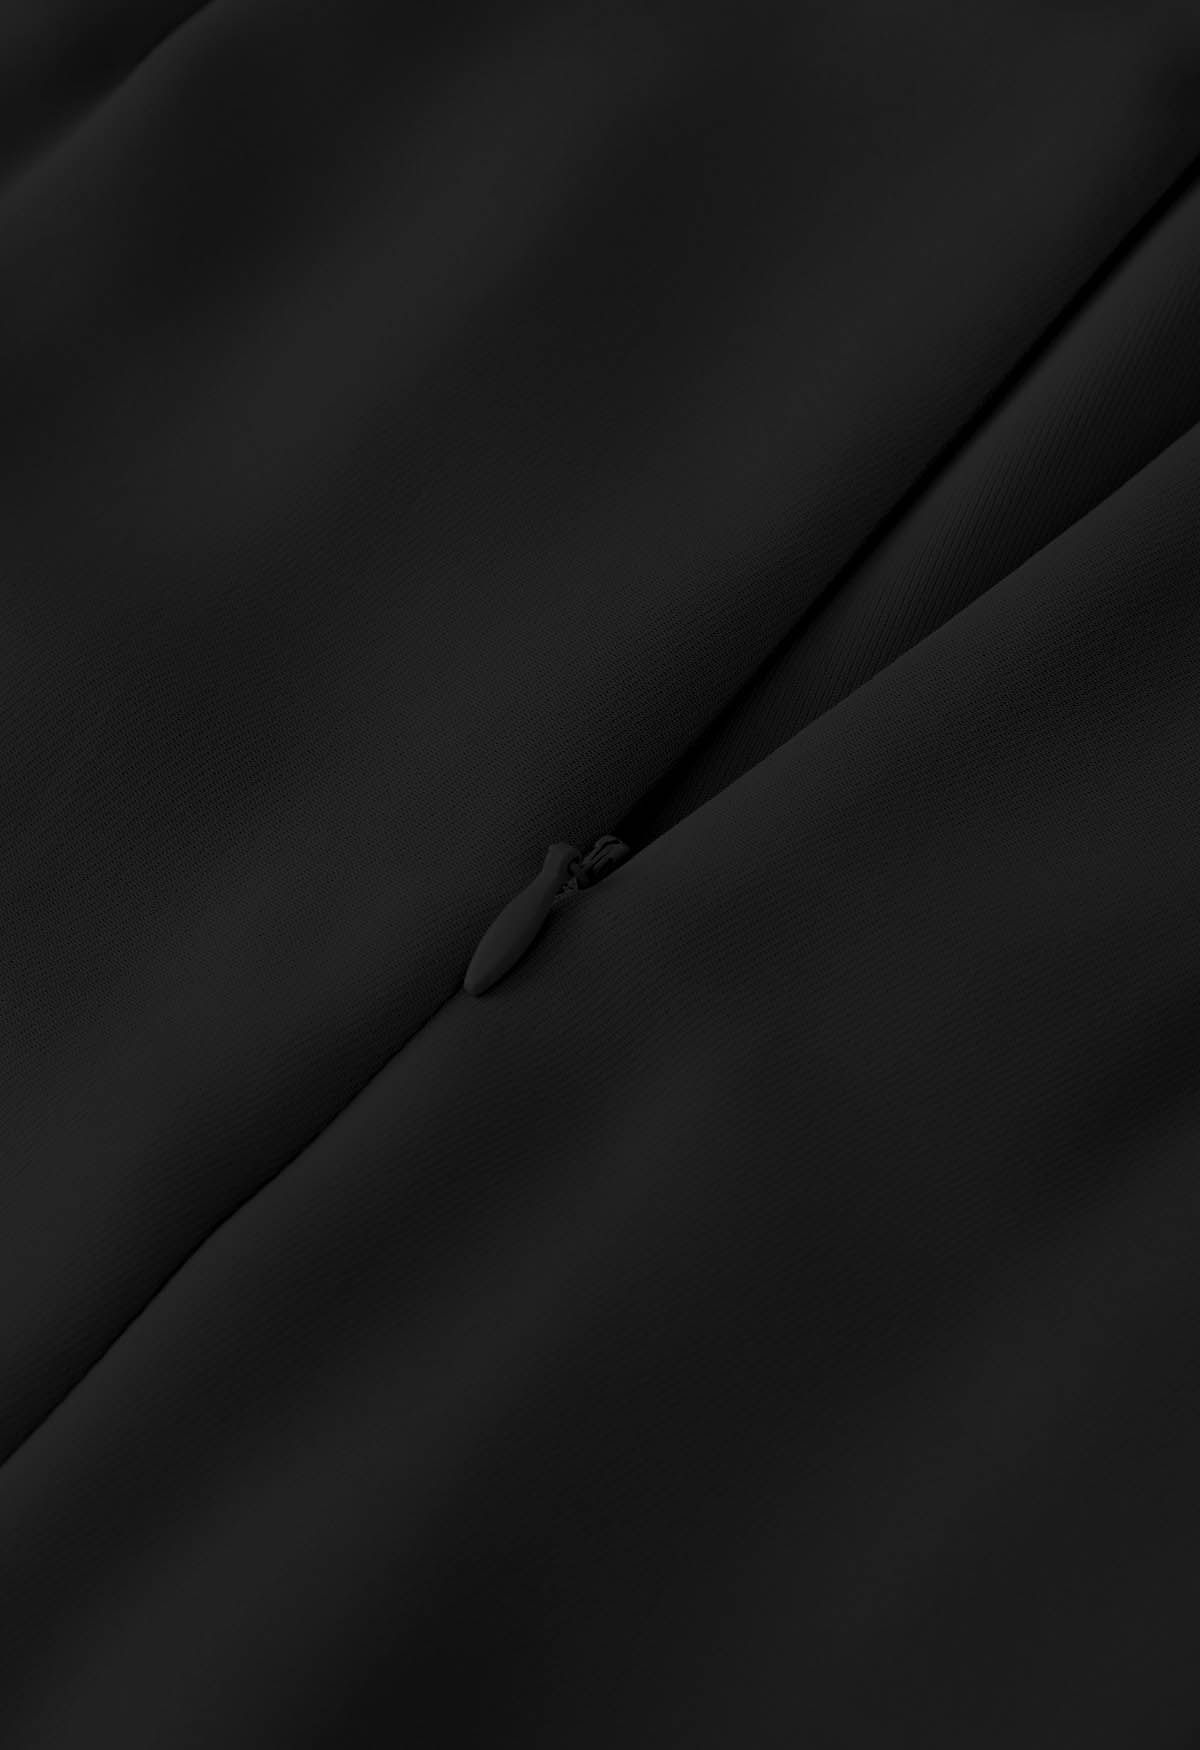 Irregular Hem Seam Detailing Midi Skirt in Black